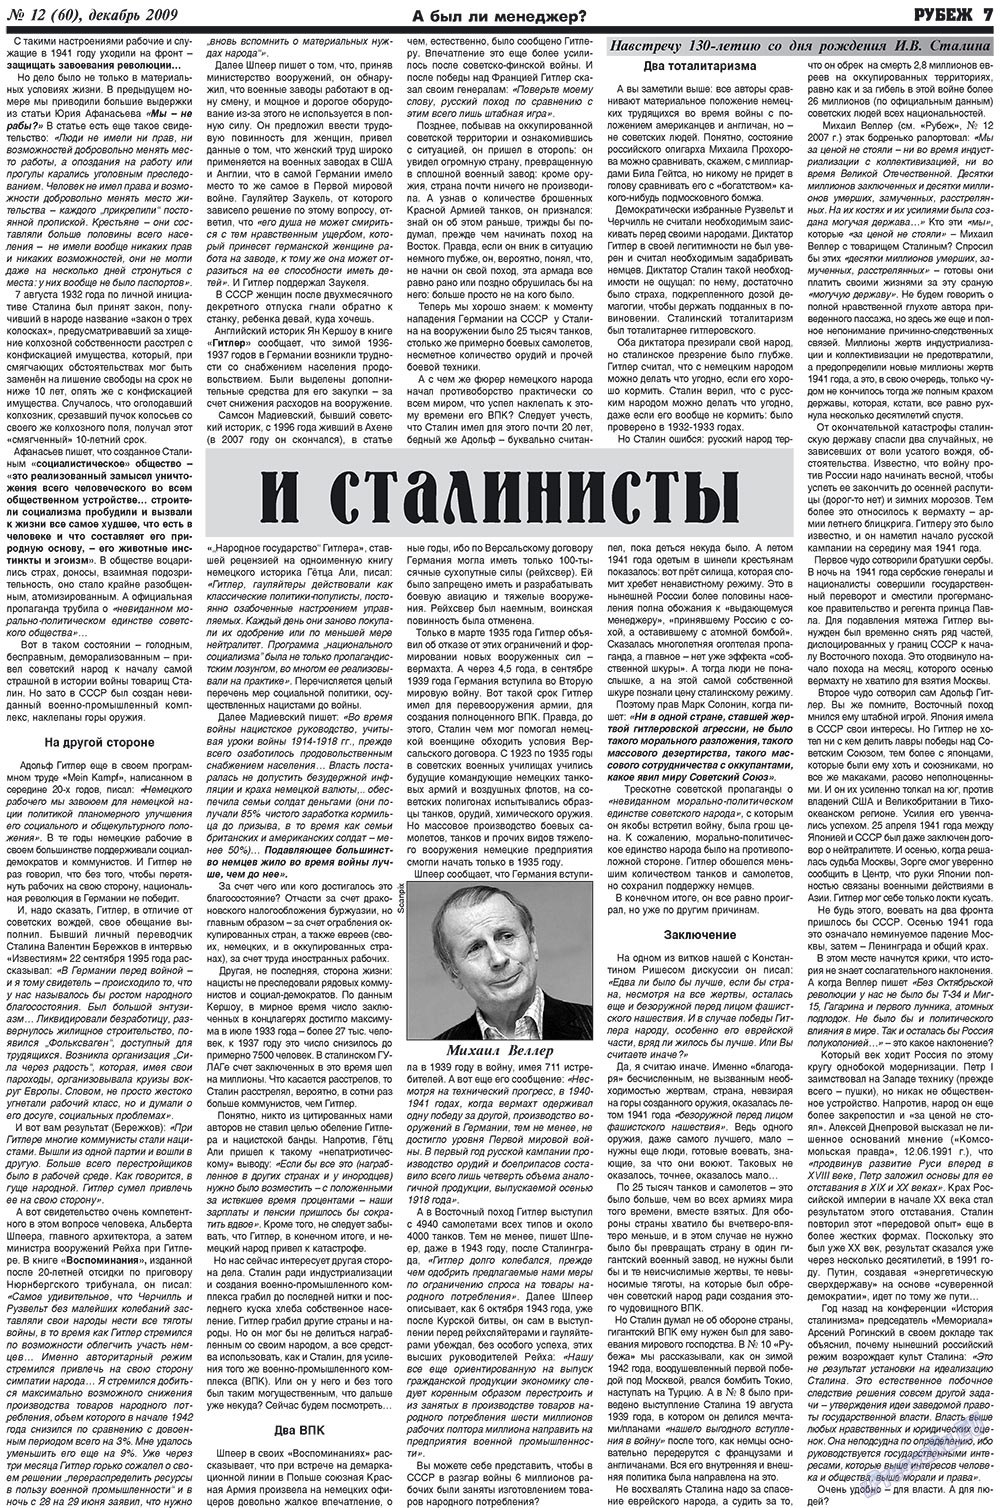 Рубеж, газета. 2009 №12 стр.7